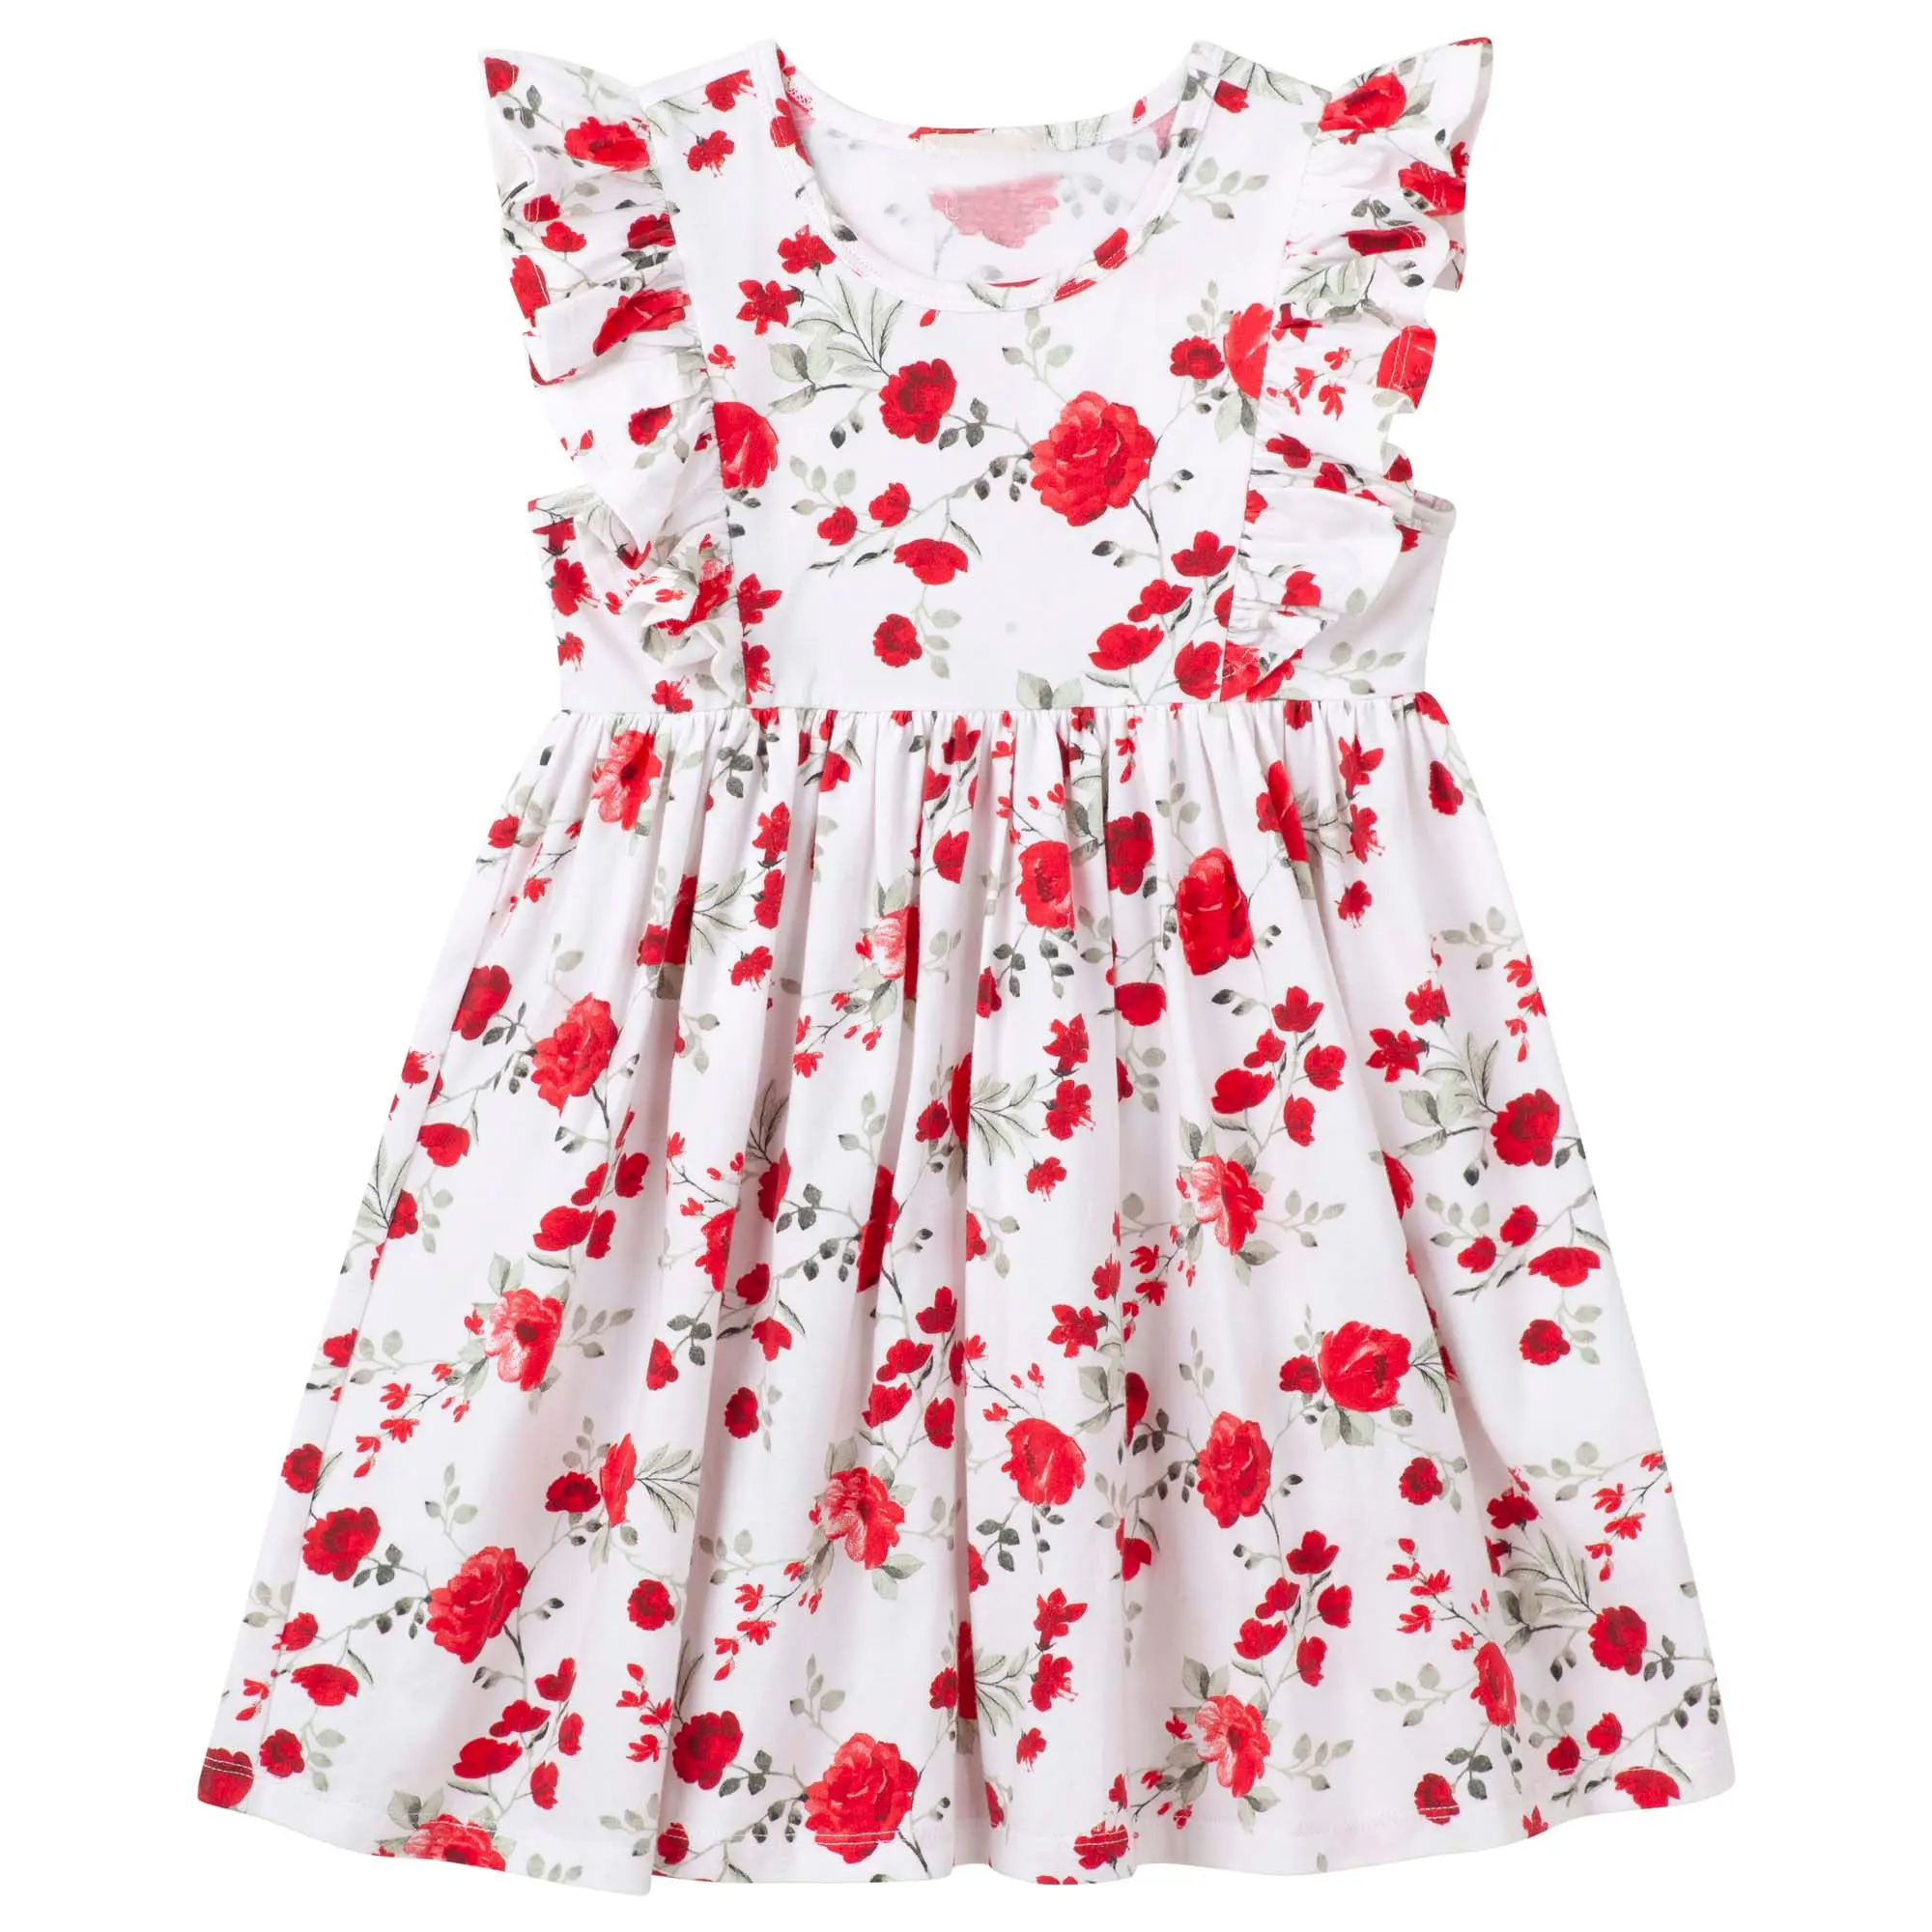 Summer flower girls' dresses 95%Bamboo Viscose 5%Spandex Baby Toddler Ruffled Sleeve Twirl Dress